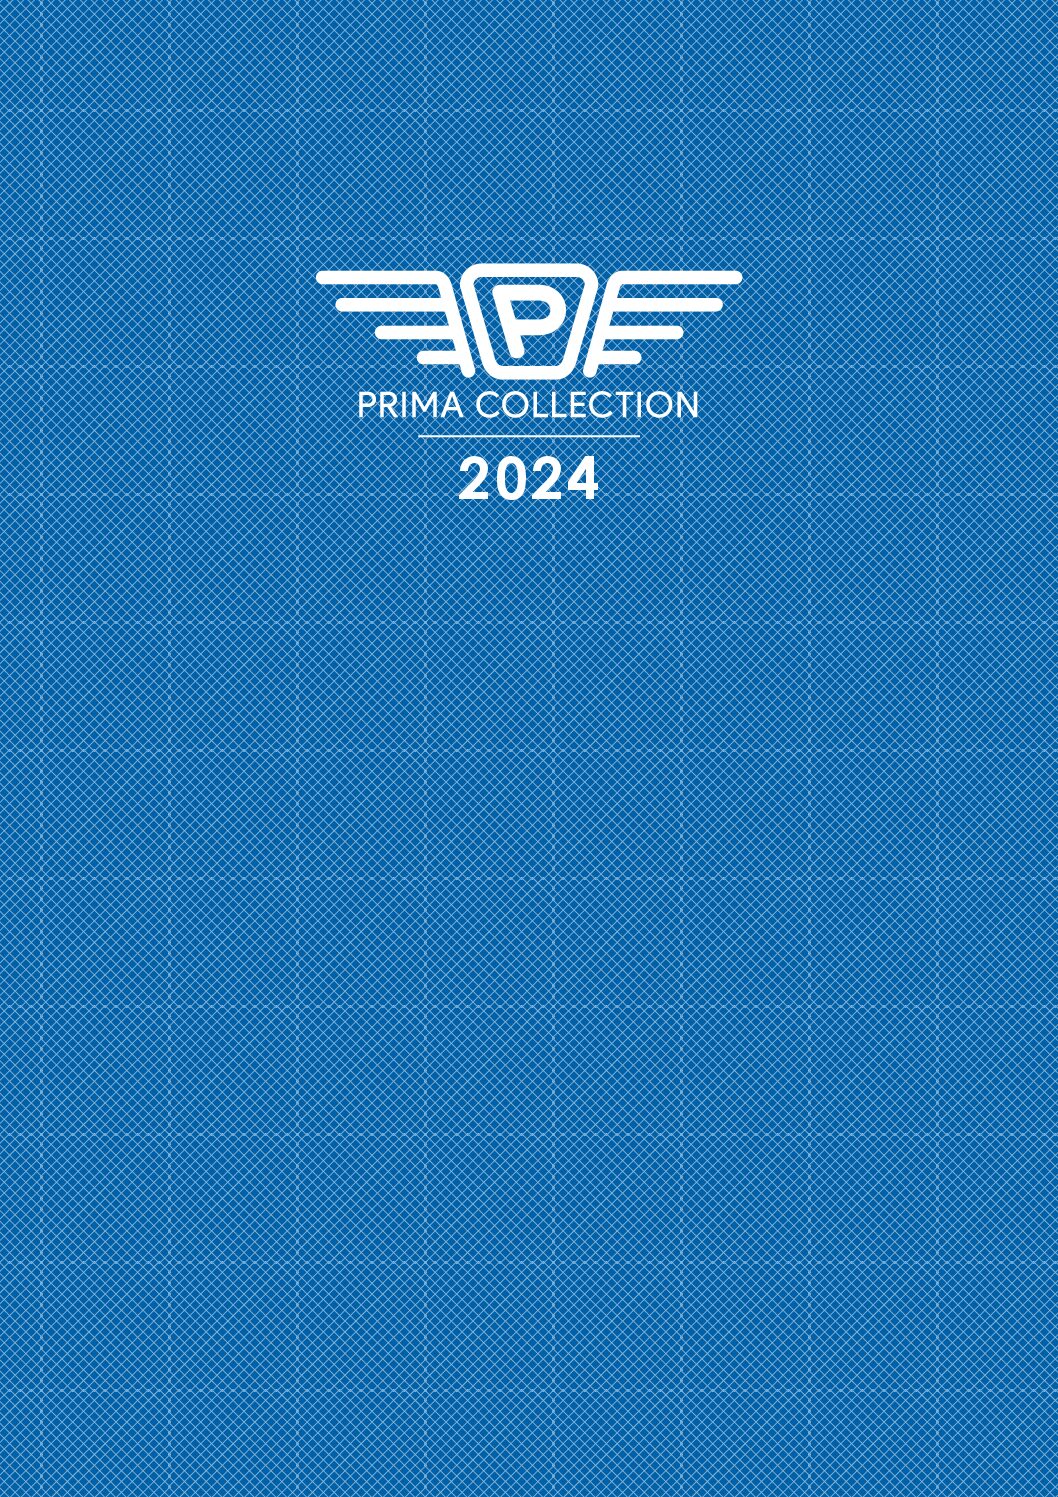 Prima Collection 2024